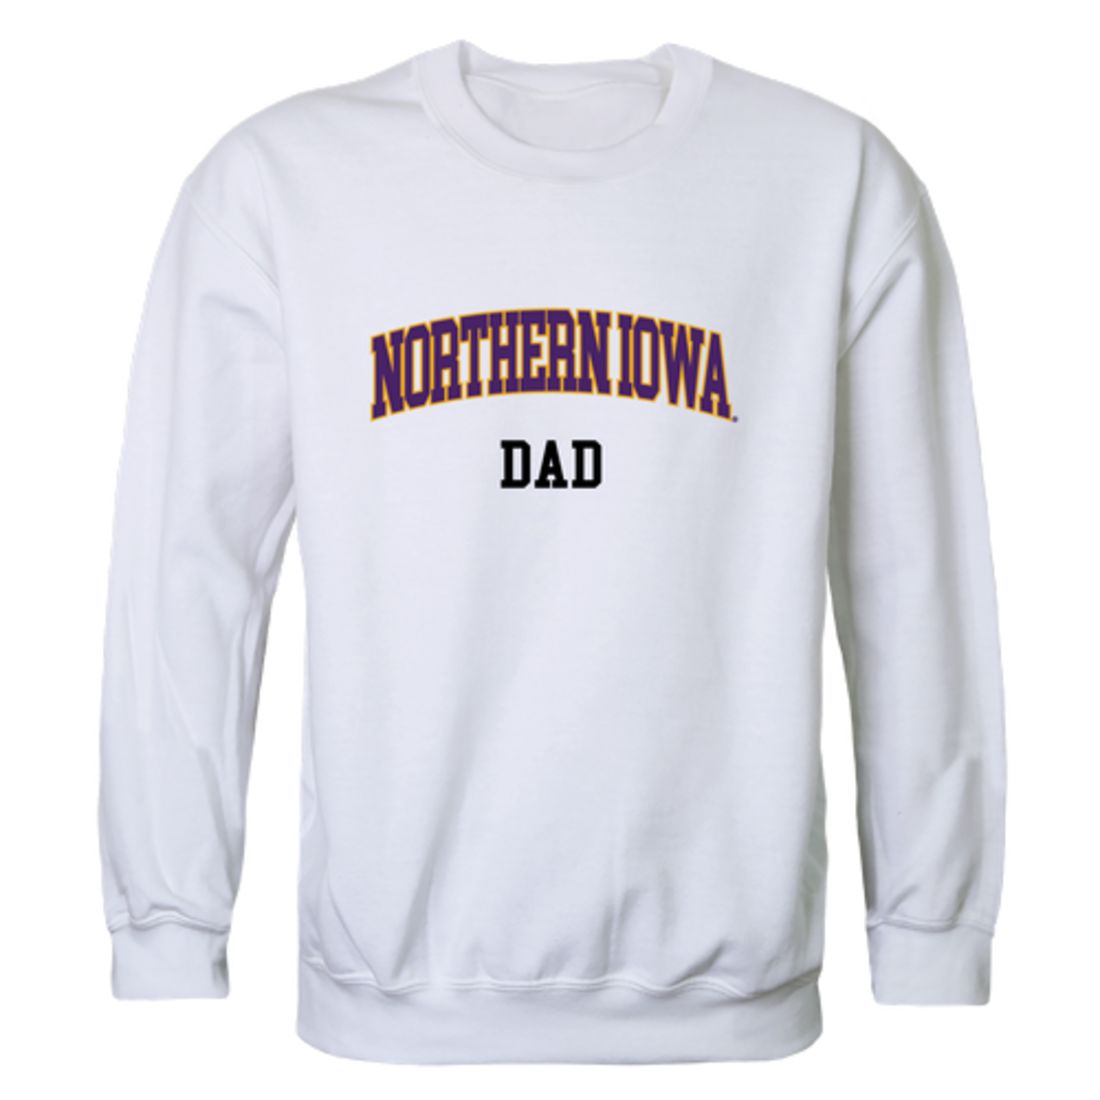 University of Northern Iowa Panthers Dad Fleece Crewneck Pullover Sweatshirt Heather Charcoal-Campus-Wardrobe